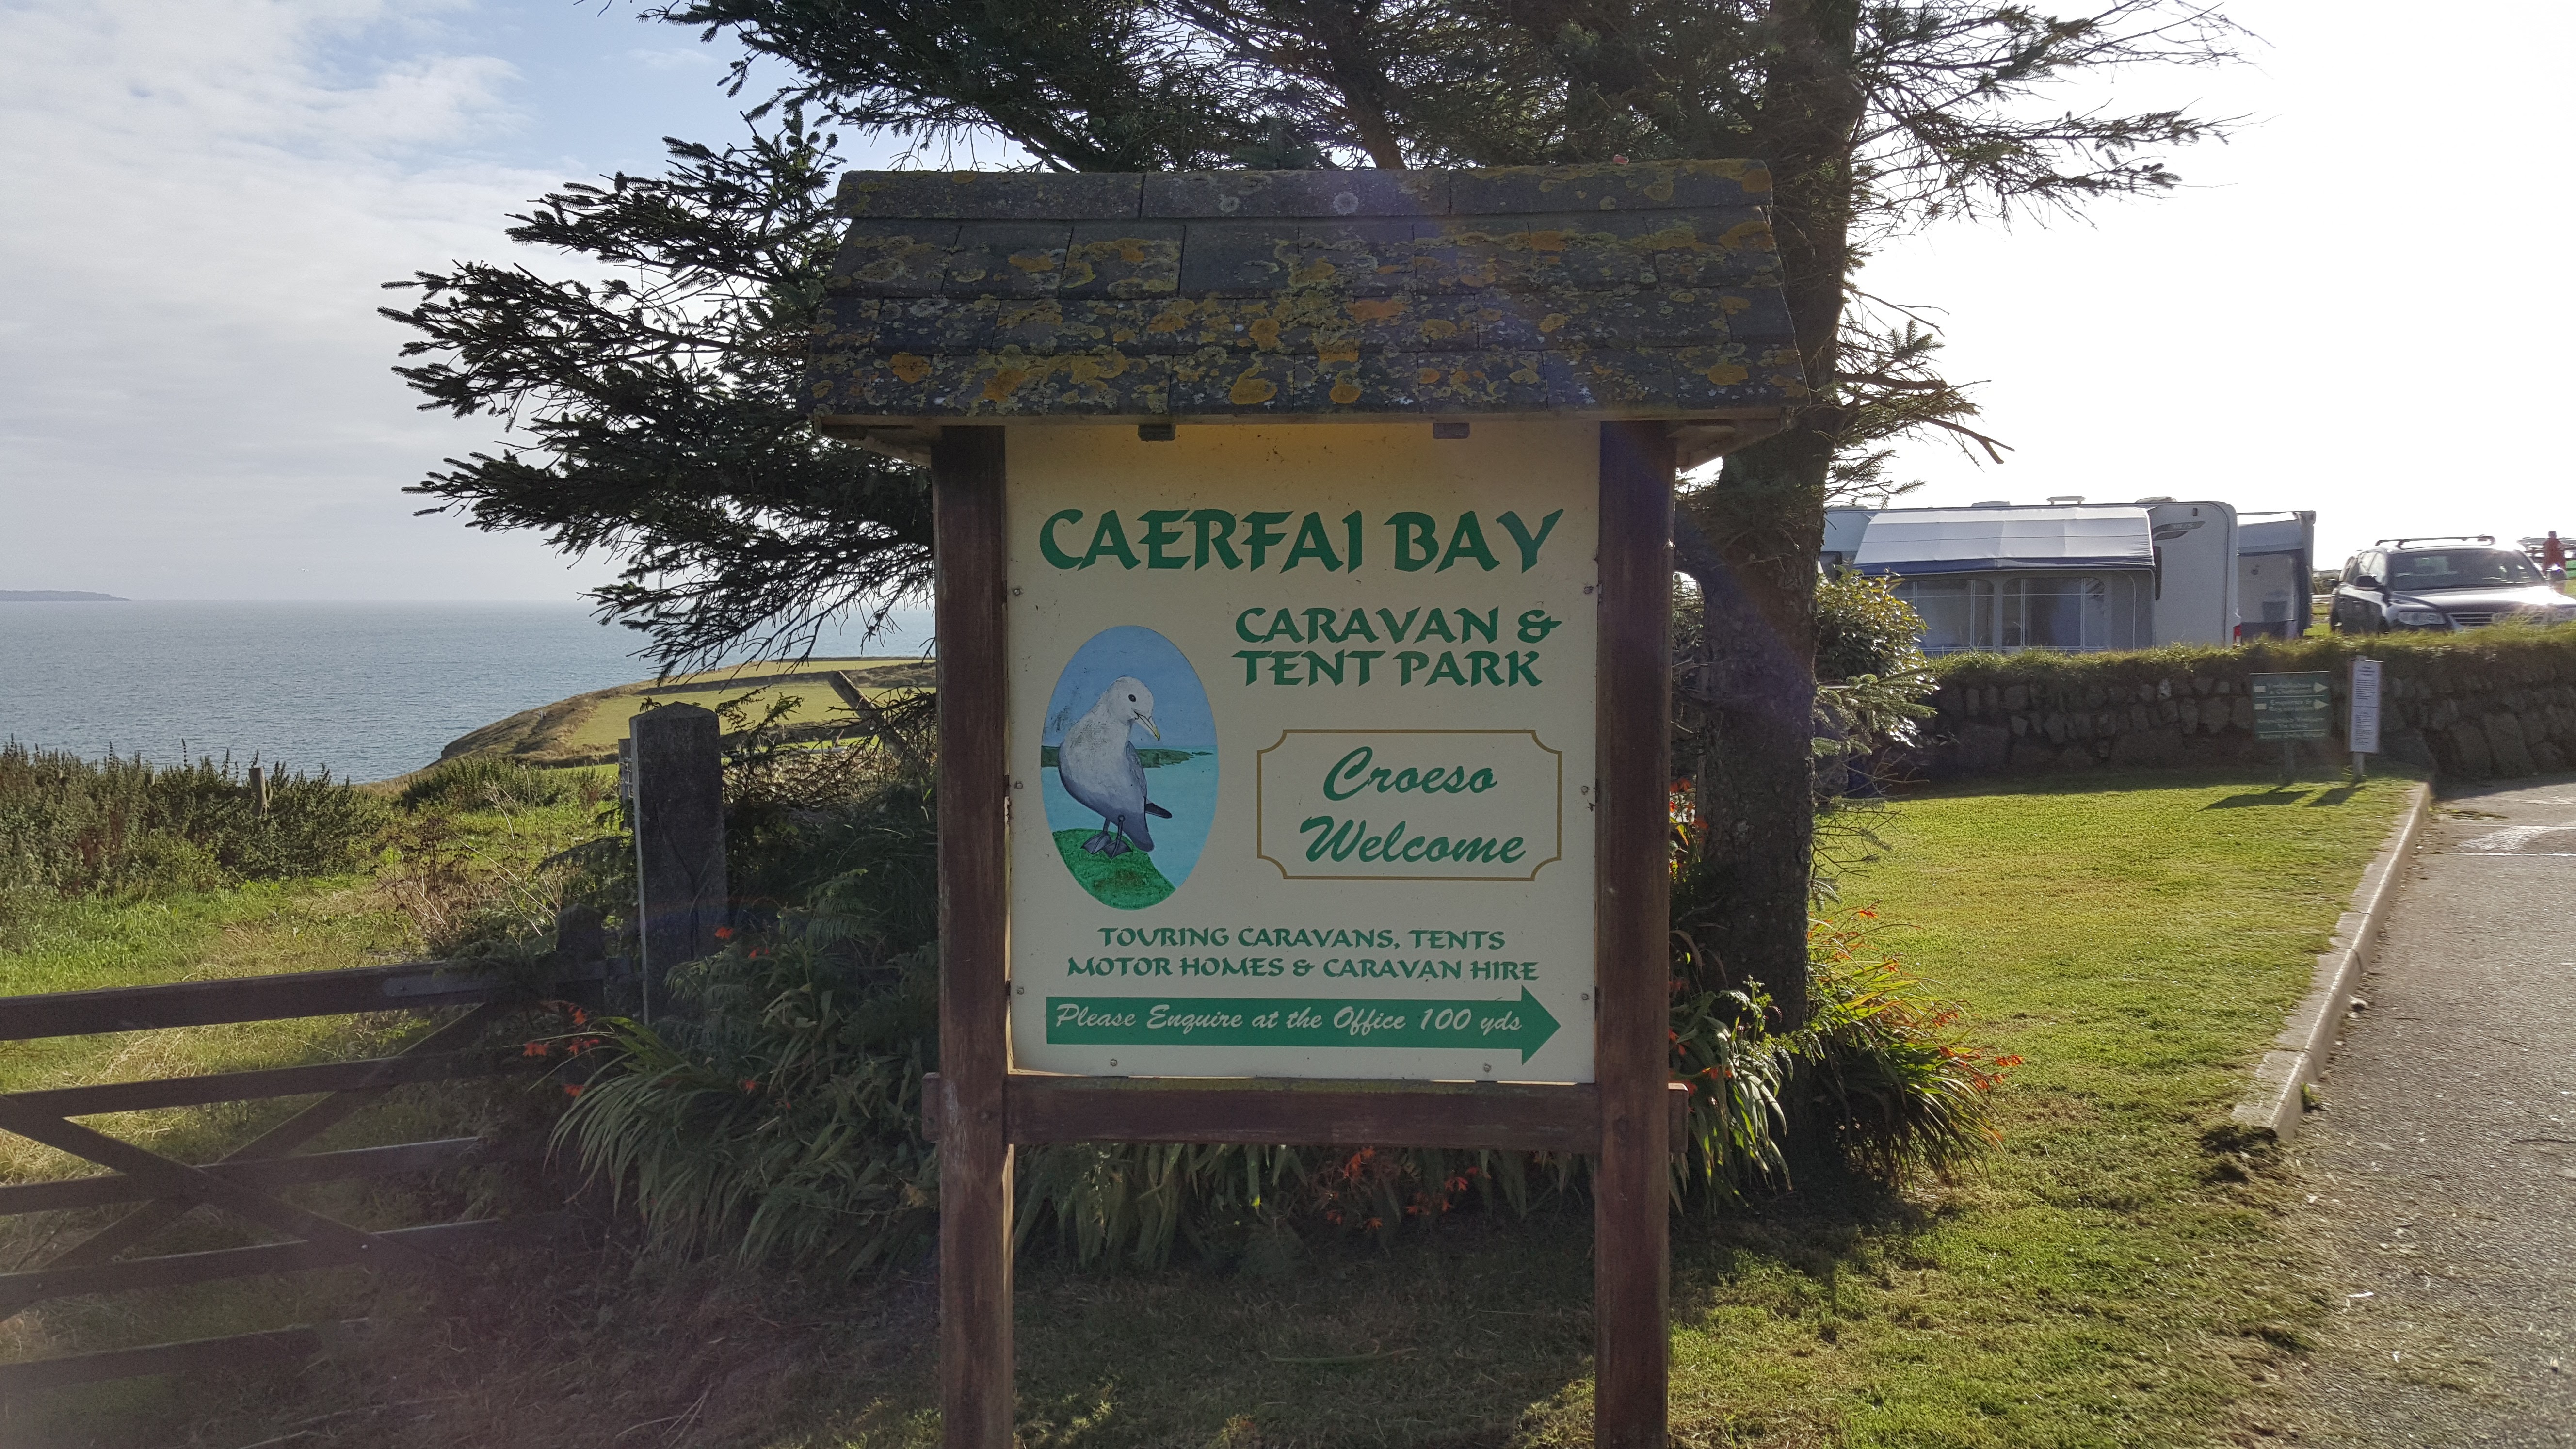 Welcome to Caerfai Bay